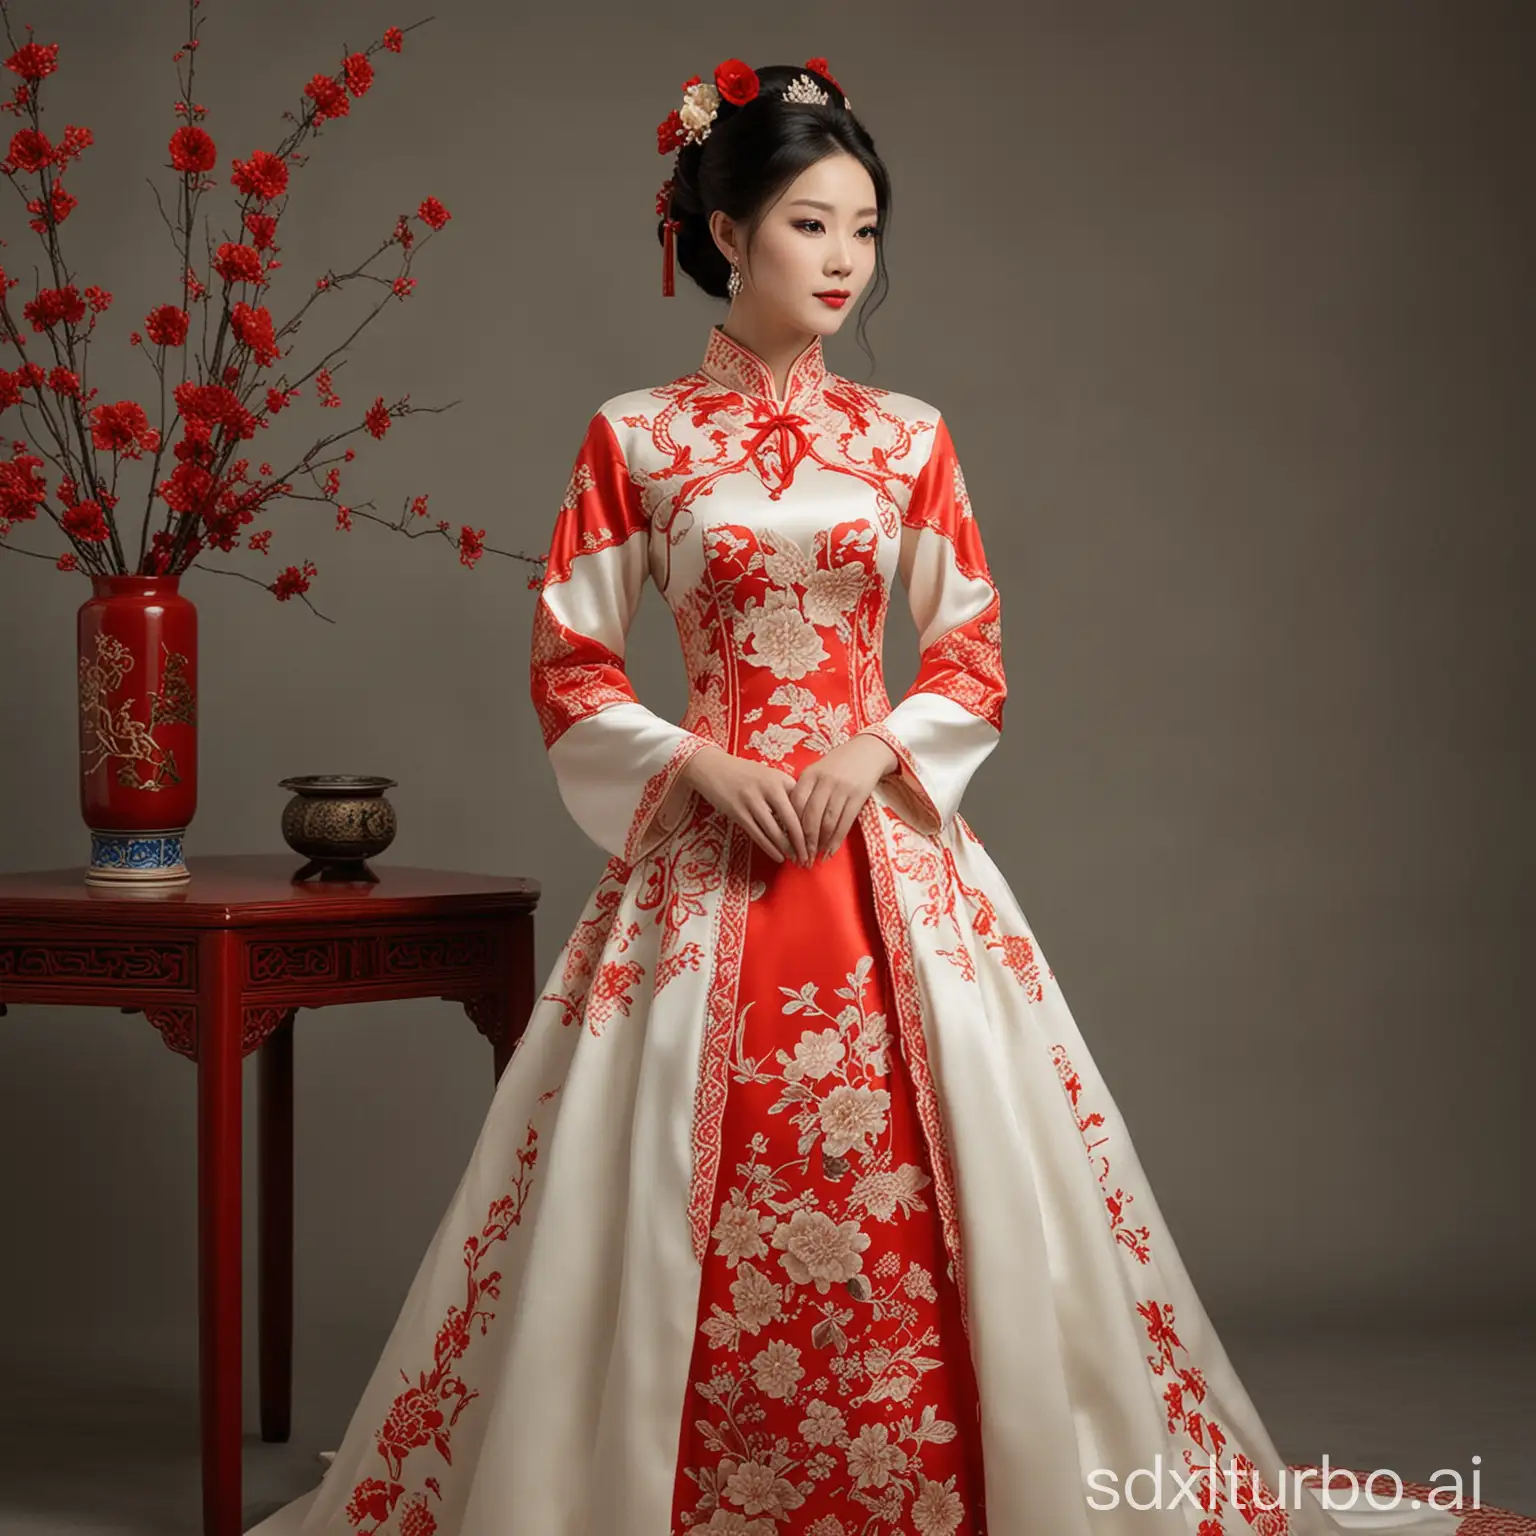 Chinese-style wedding dress, retro wedding dress